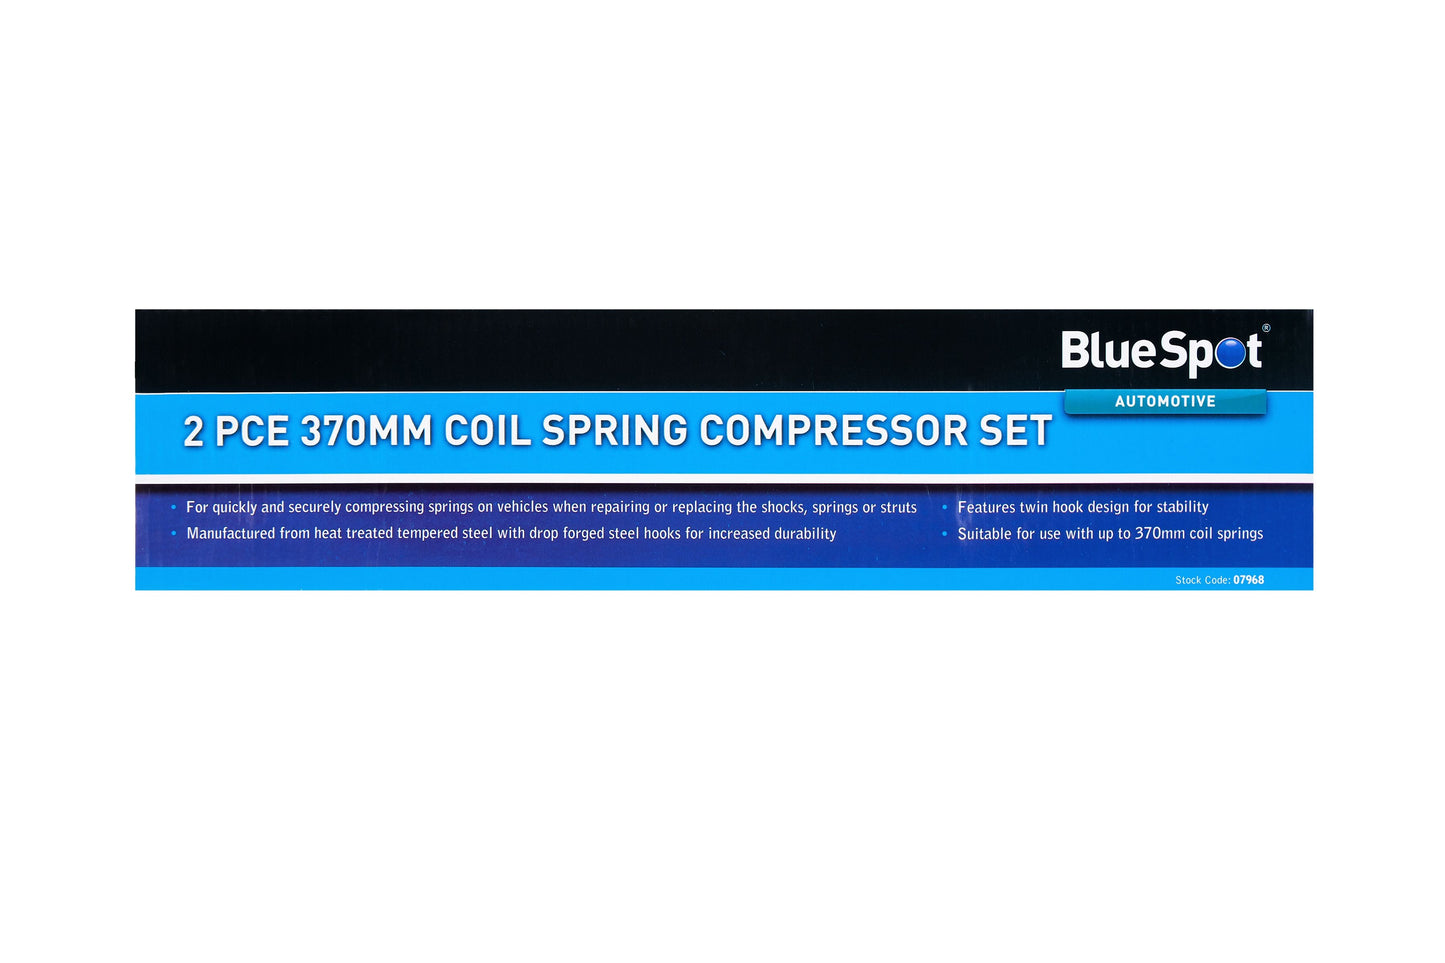 2 PCE 370MM COIL SPRING COMPRESSOR SET